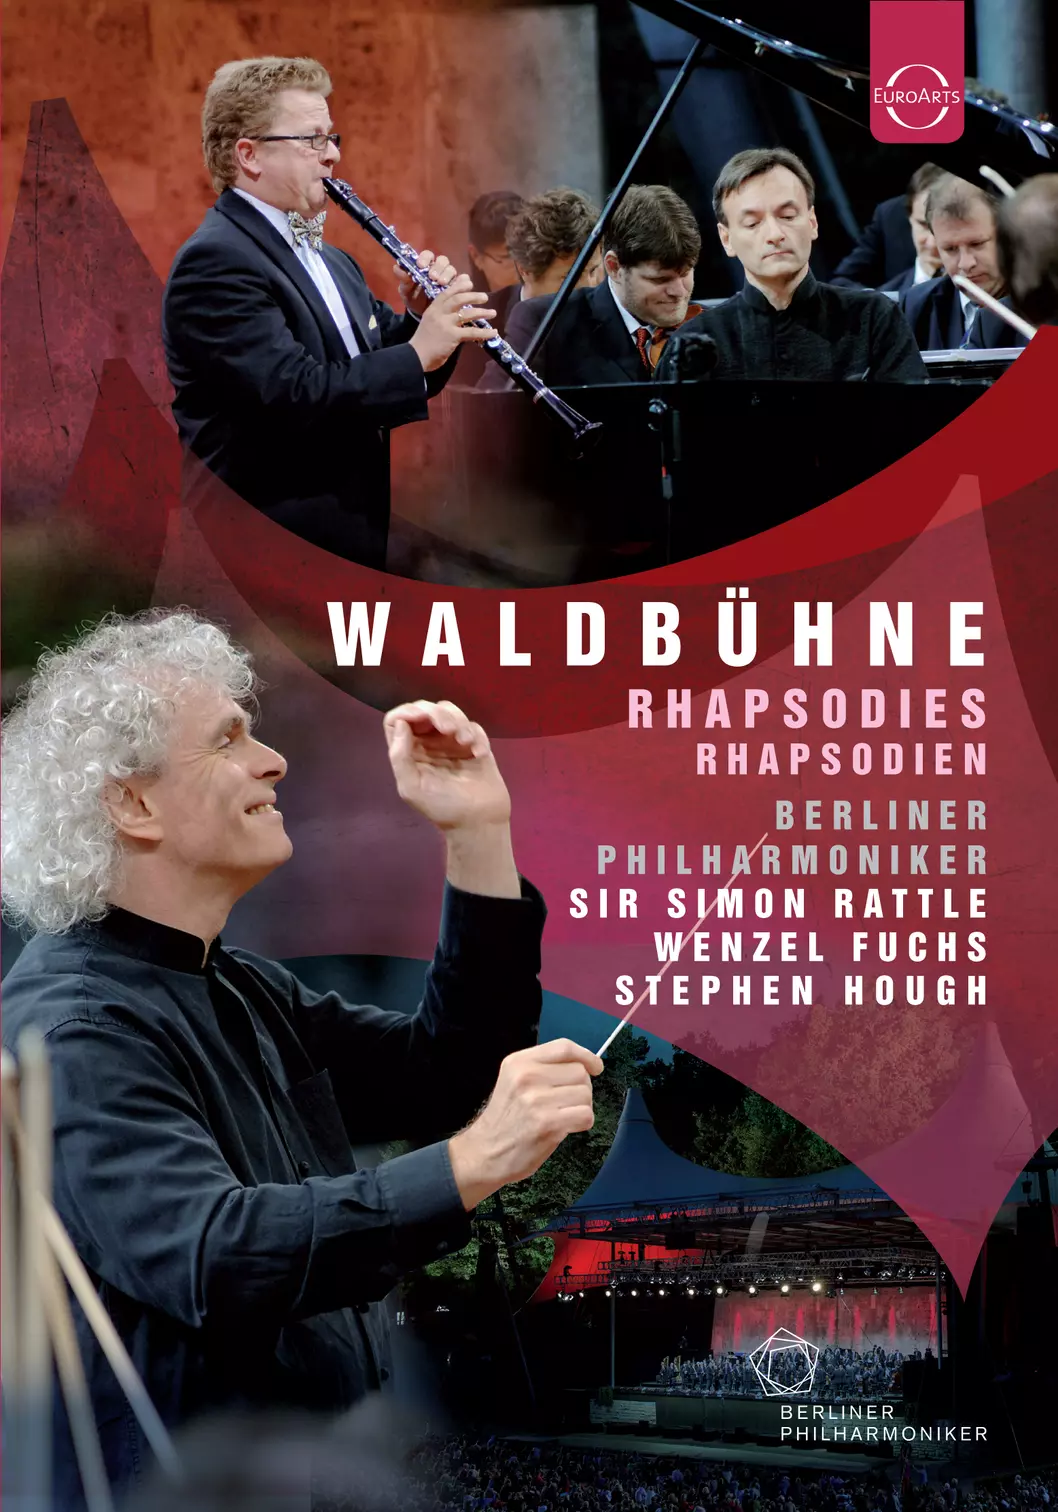 Waldbühne 2007 from Berlin - Rhapsodies